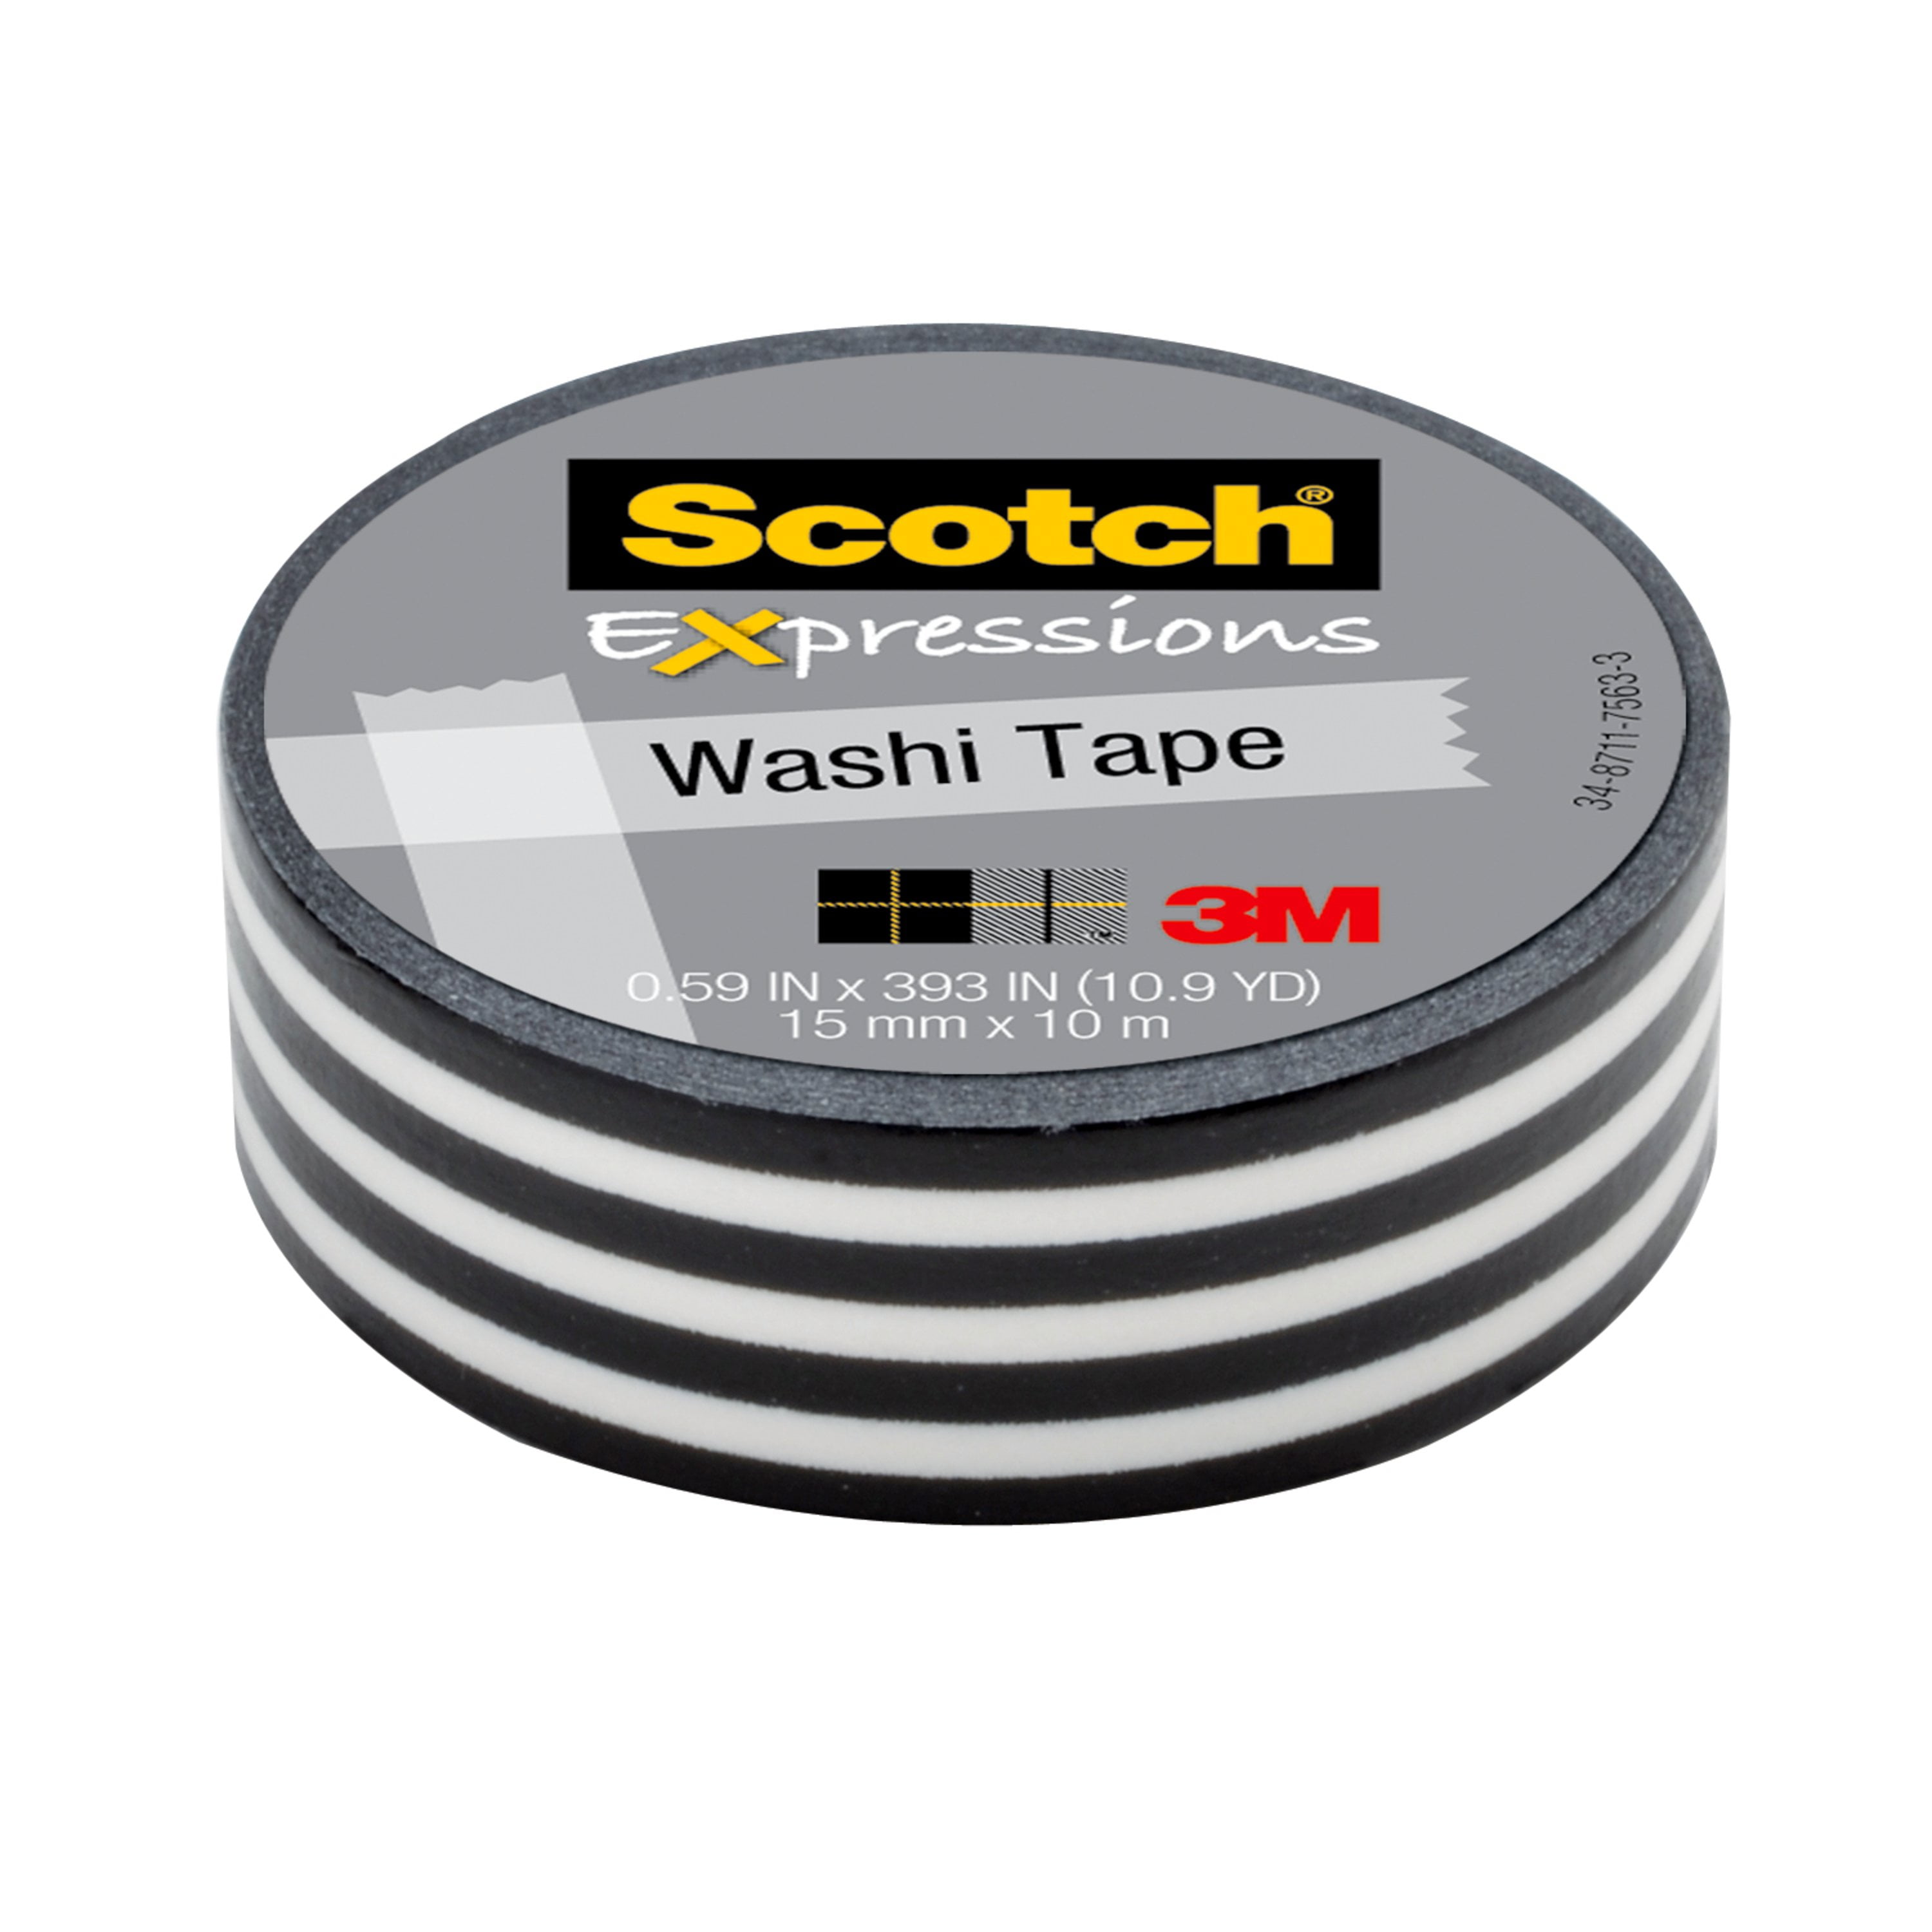 Paper Source Bright Skinny Washi Tape